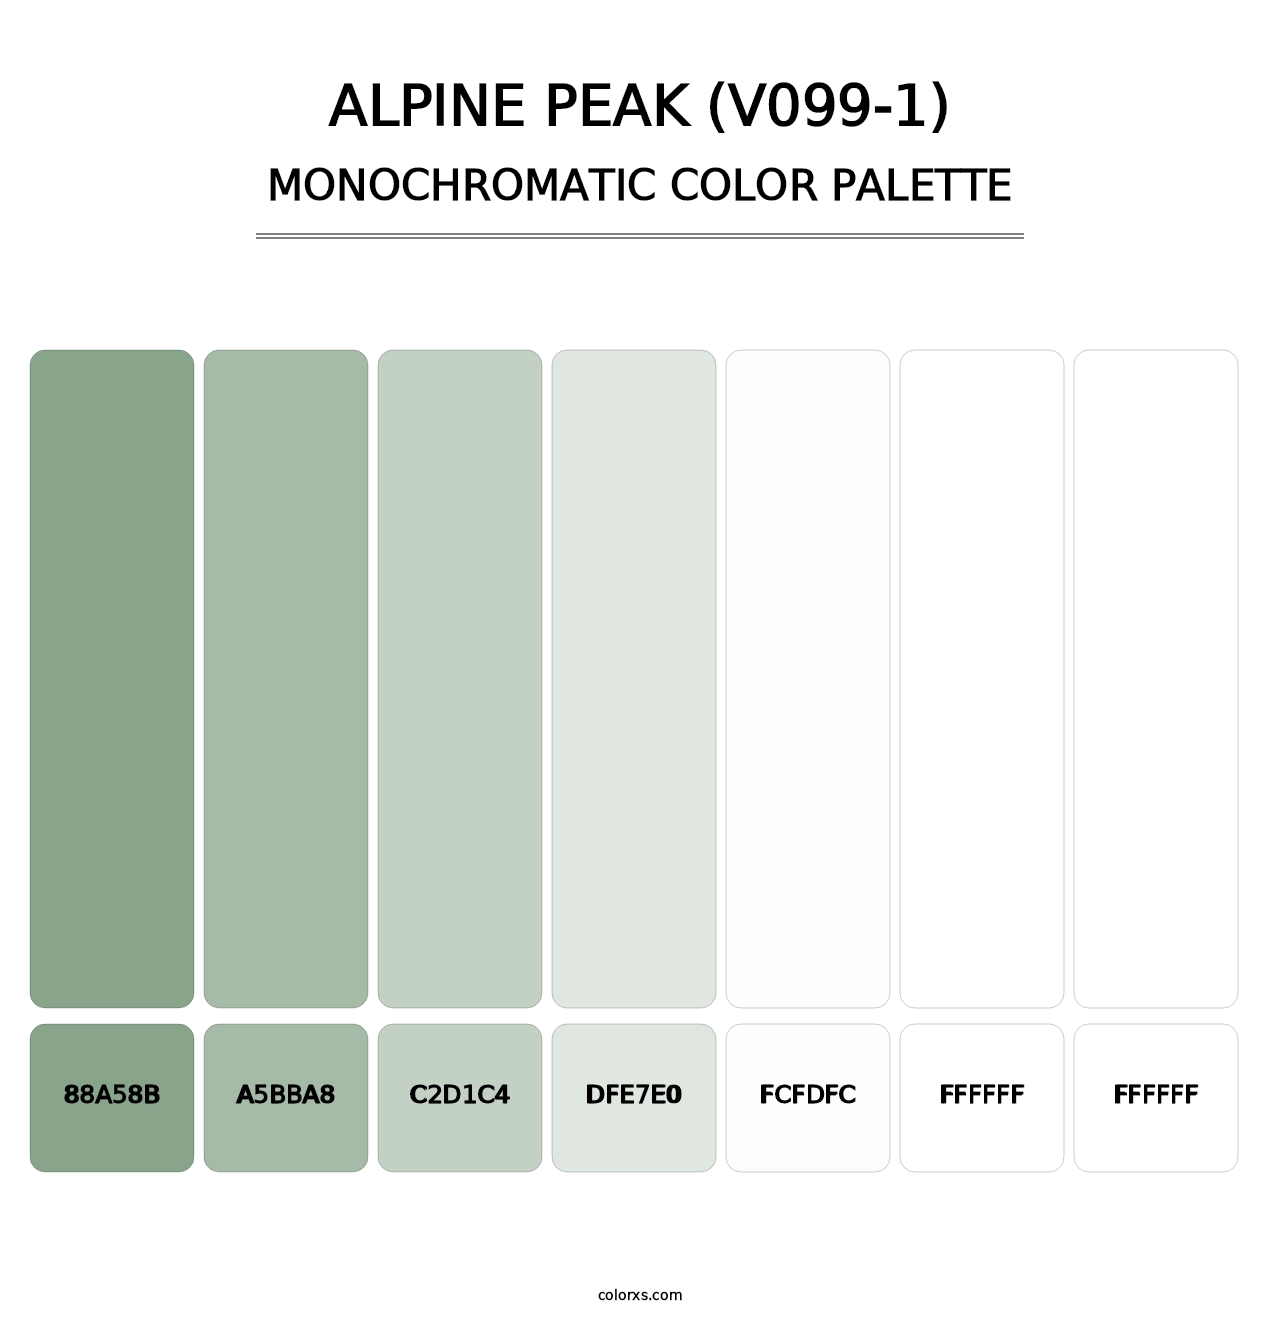 Alpine Peak (V099-1) - Monochromatic Color Palette